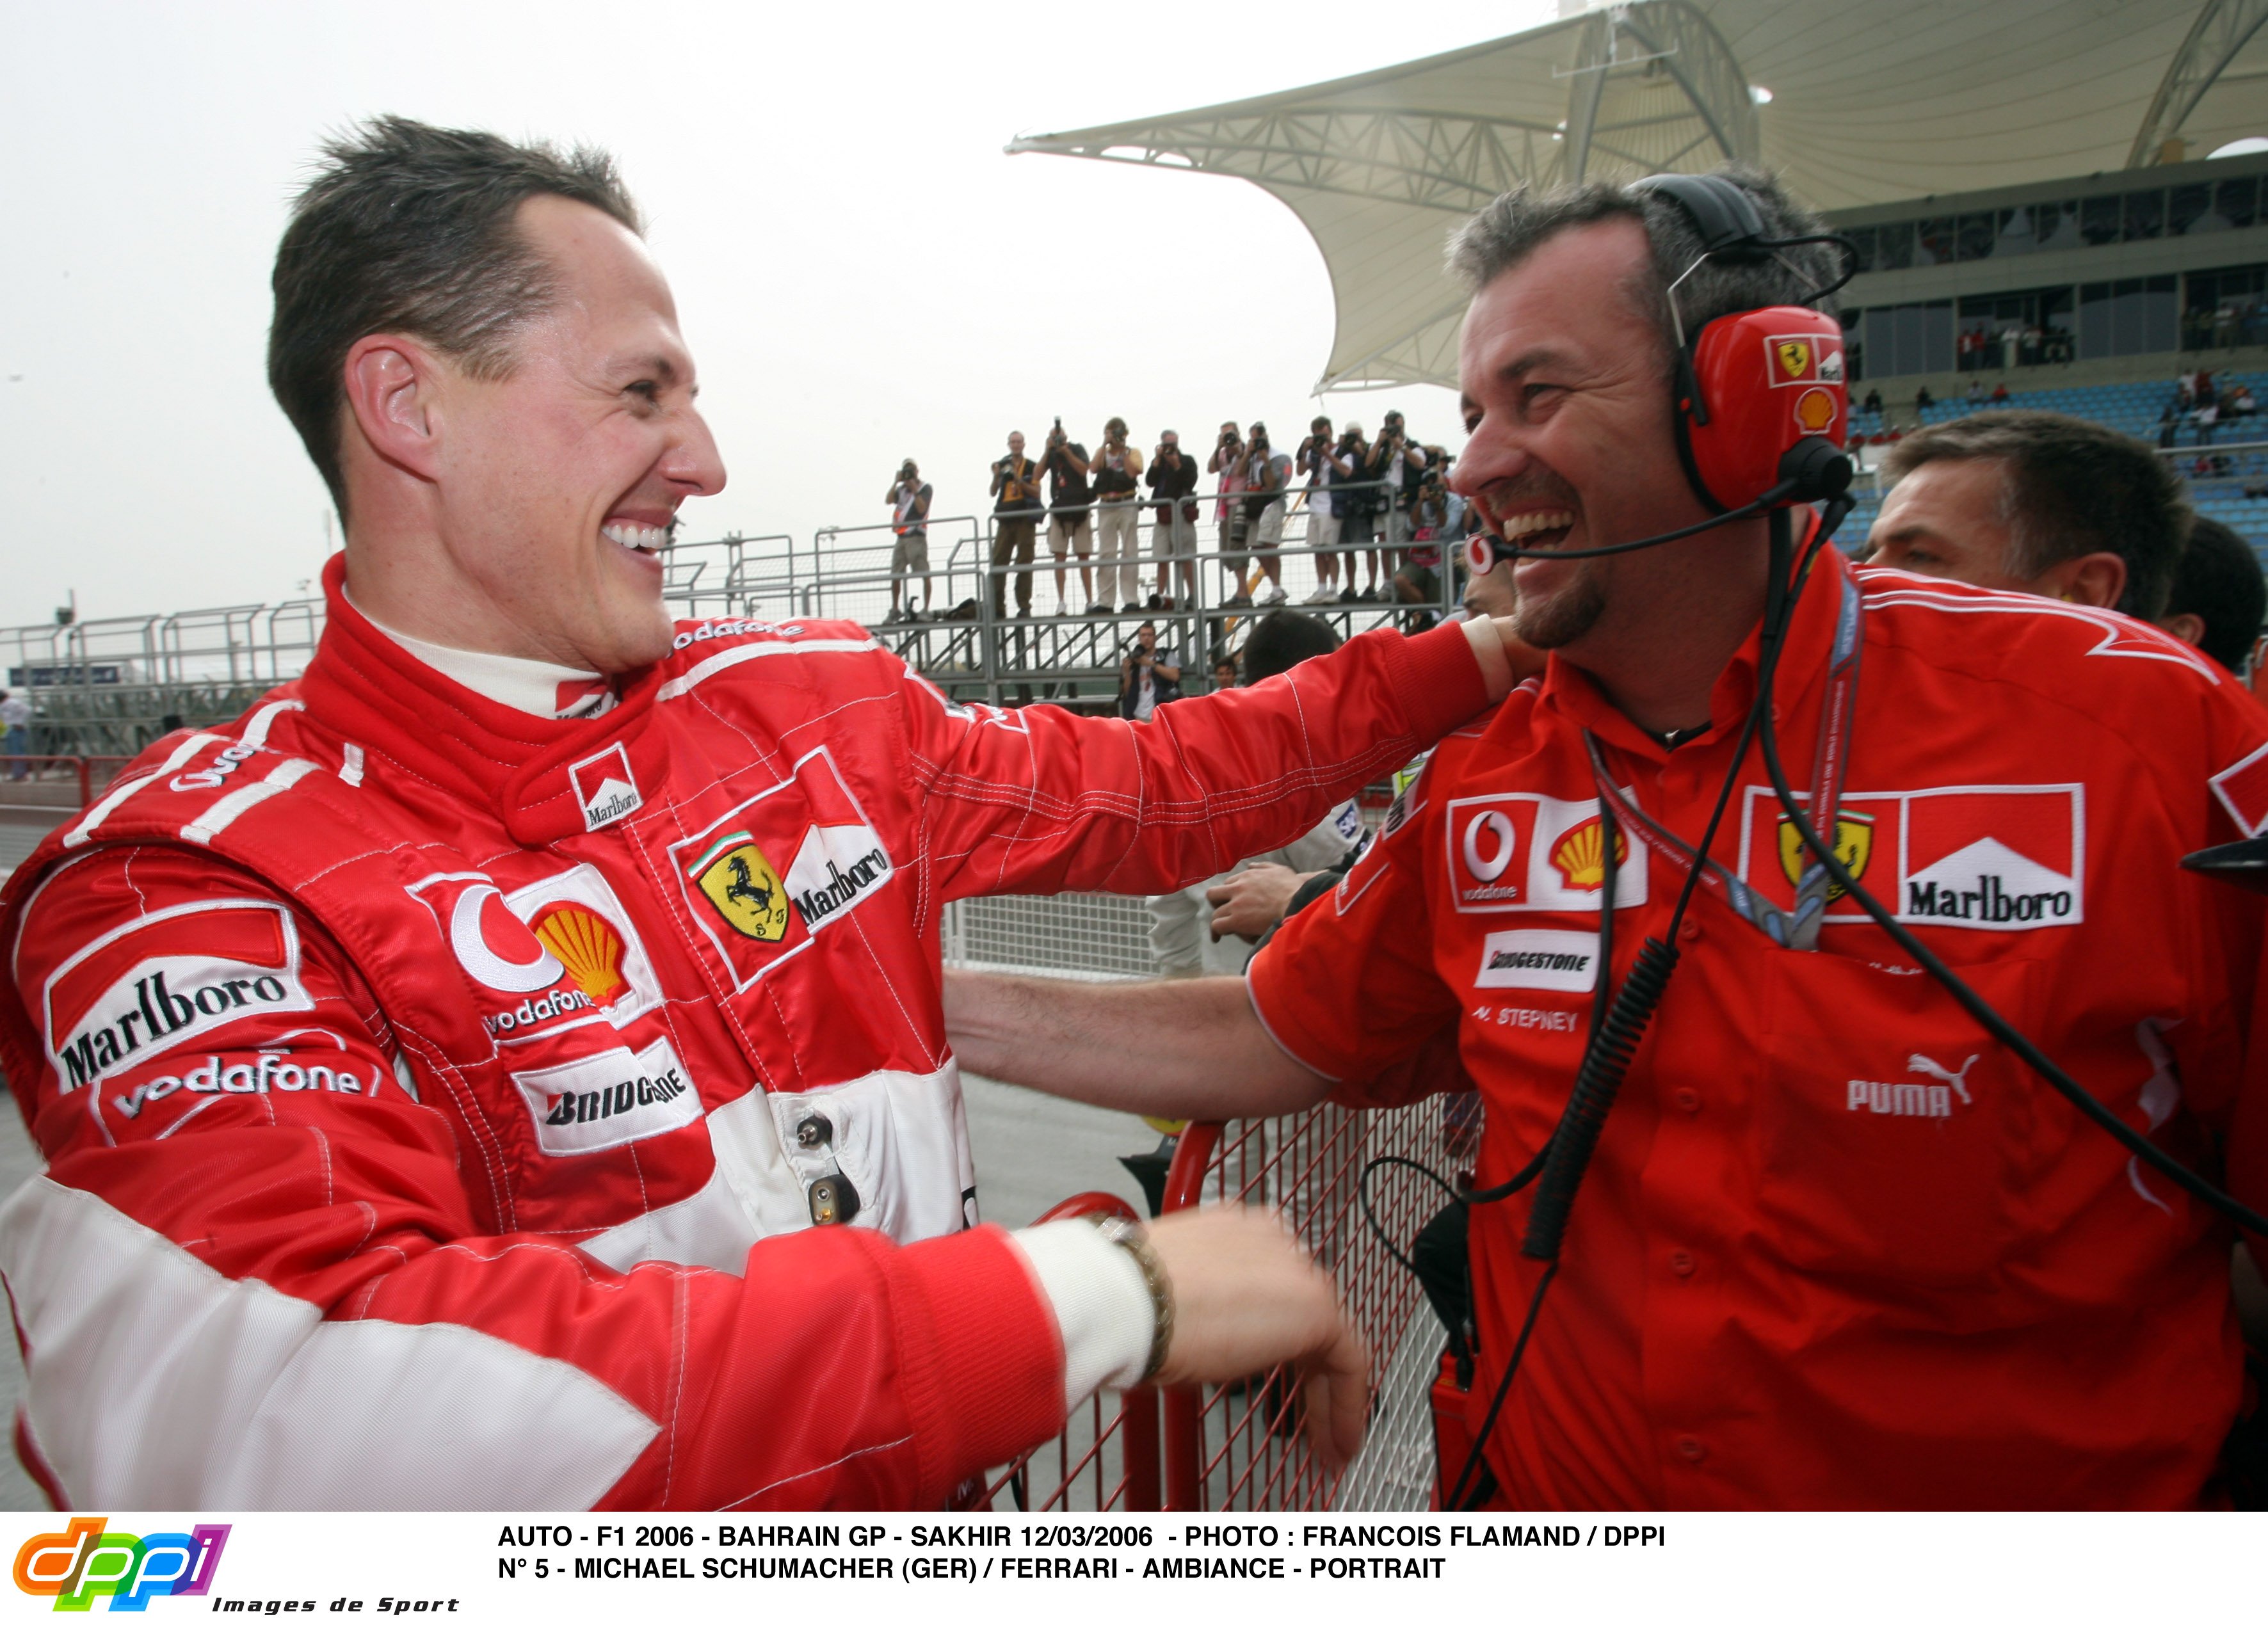 Vergüenza mundial por una entrevista falsa a Michael Schumacher